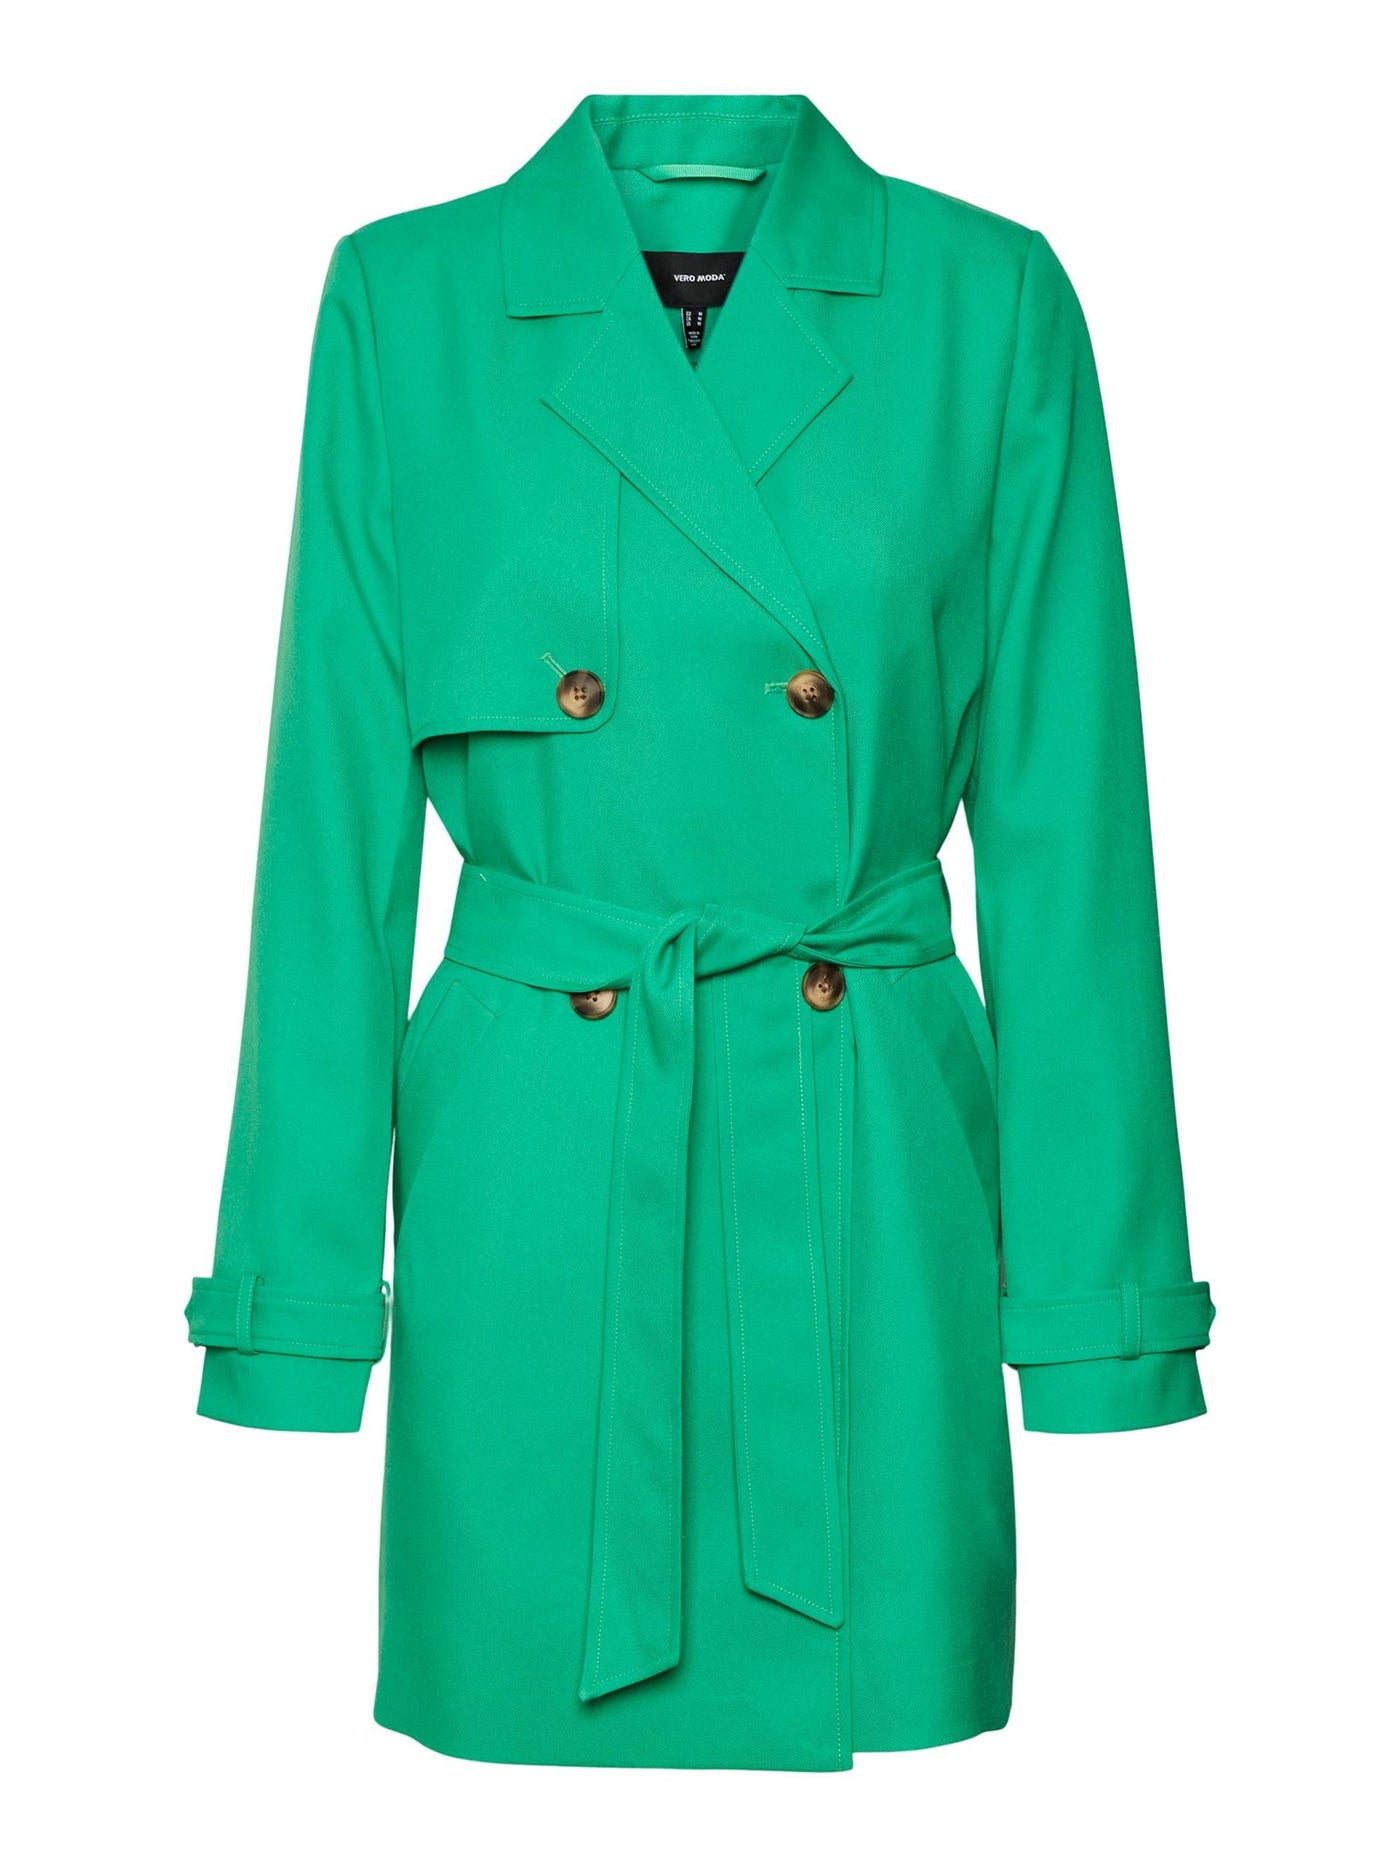 Celeste Trench Coat - Bright Green - Vero Moda